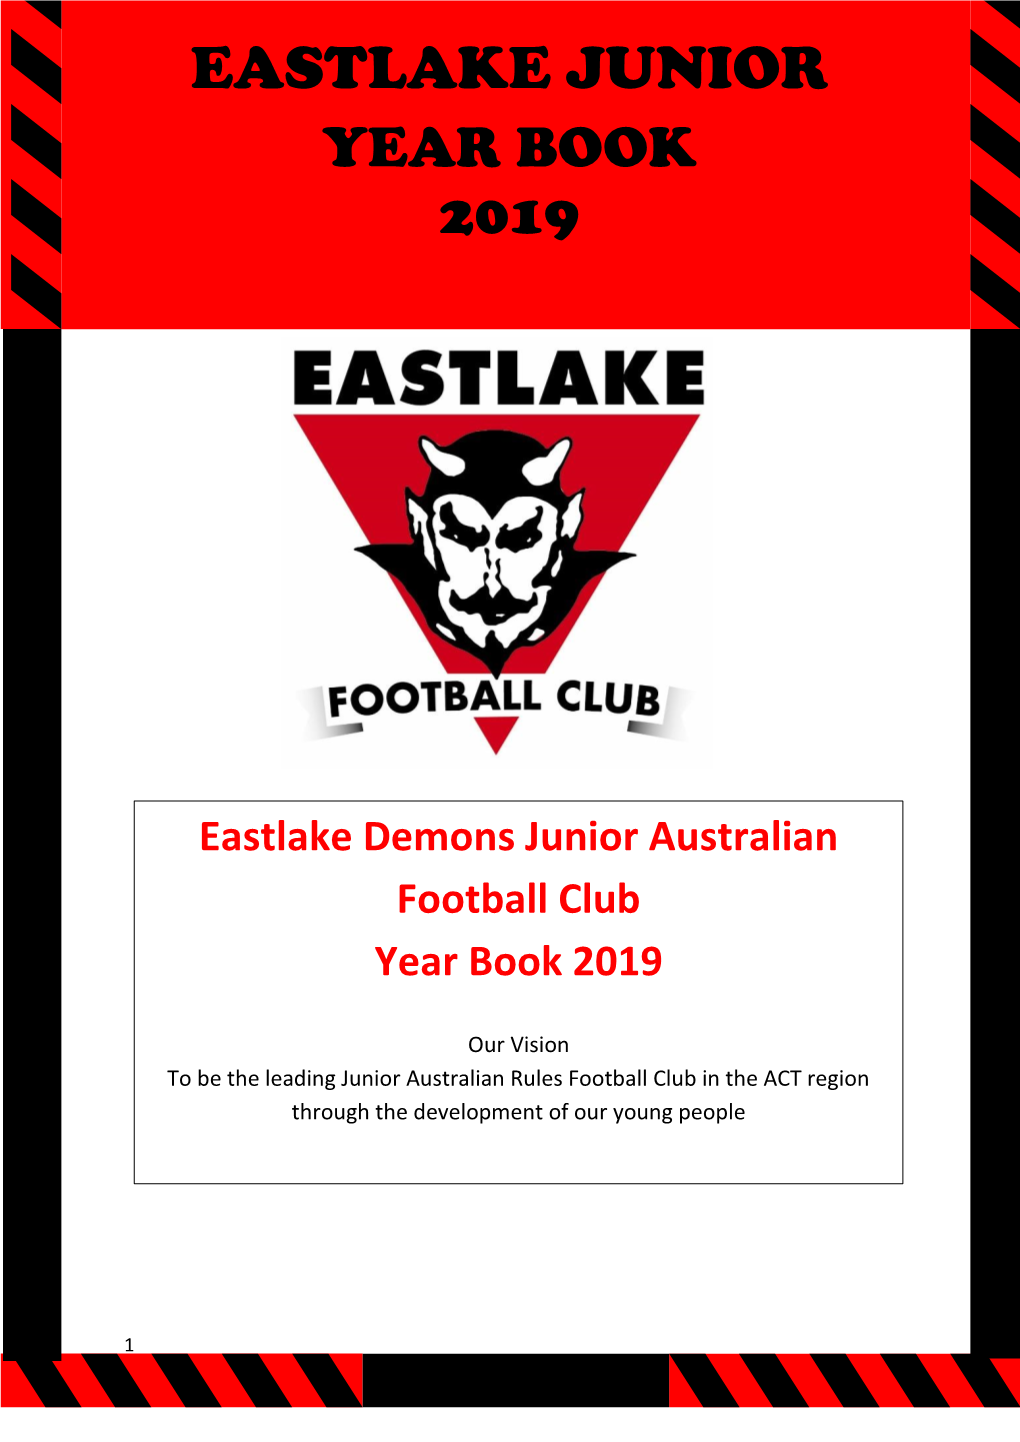 Eastlake Junior Year Book 2019